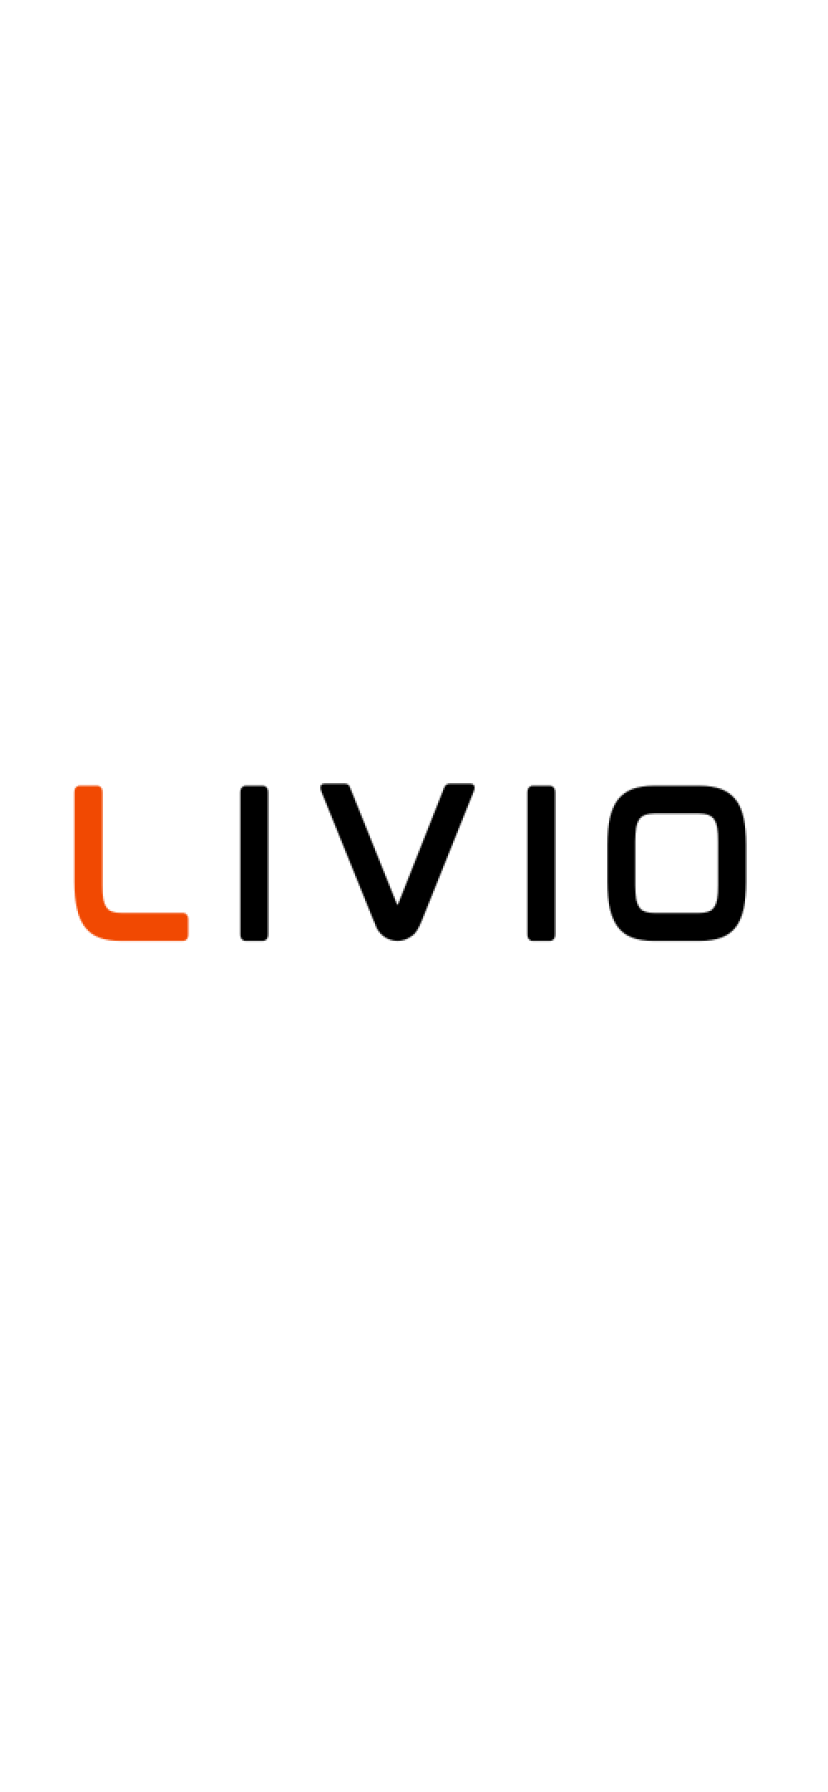 Livio.co Domain Name For Sale